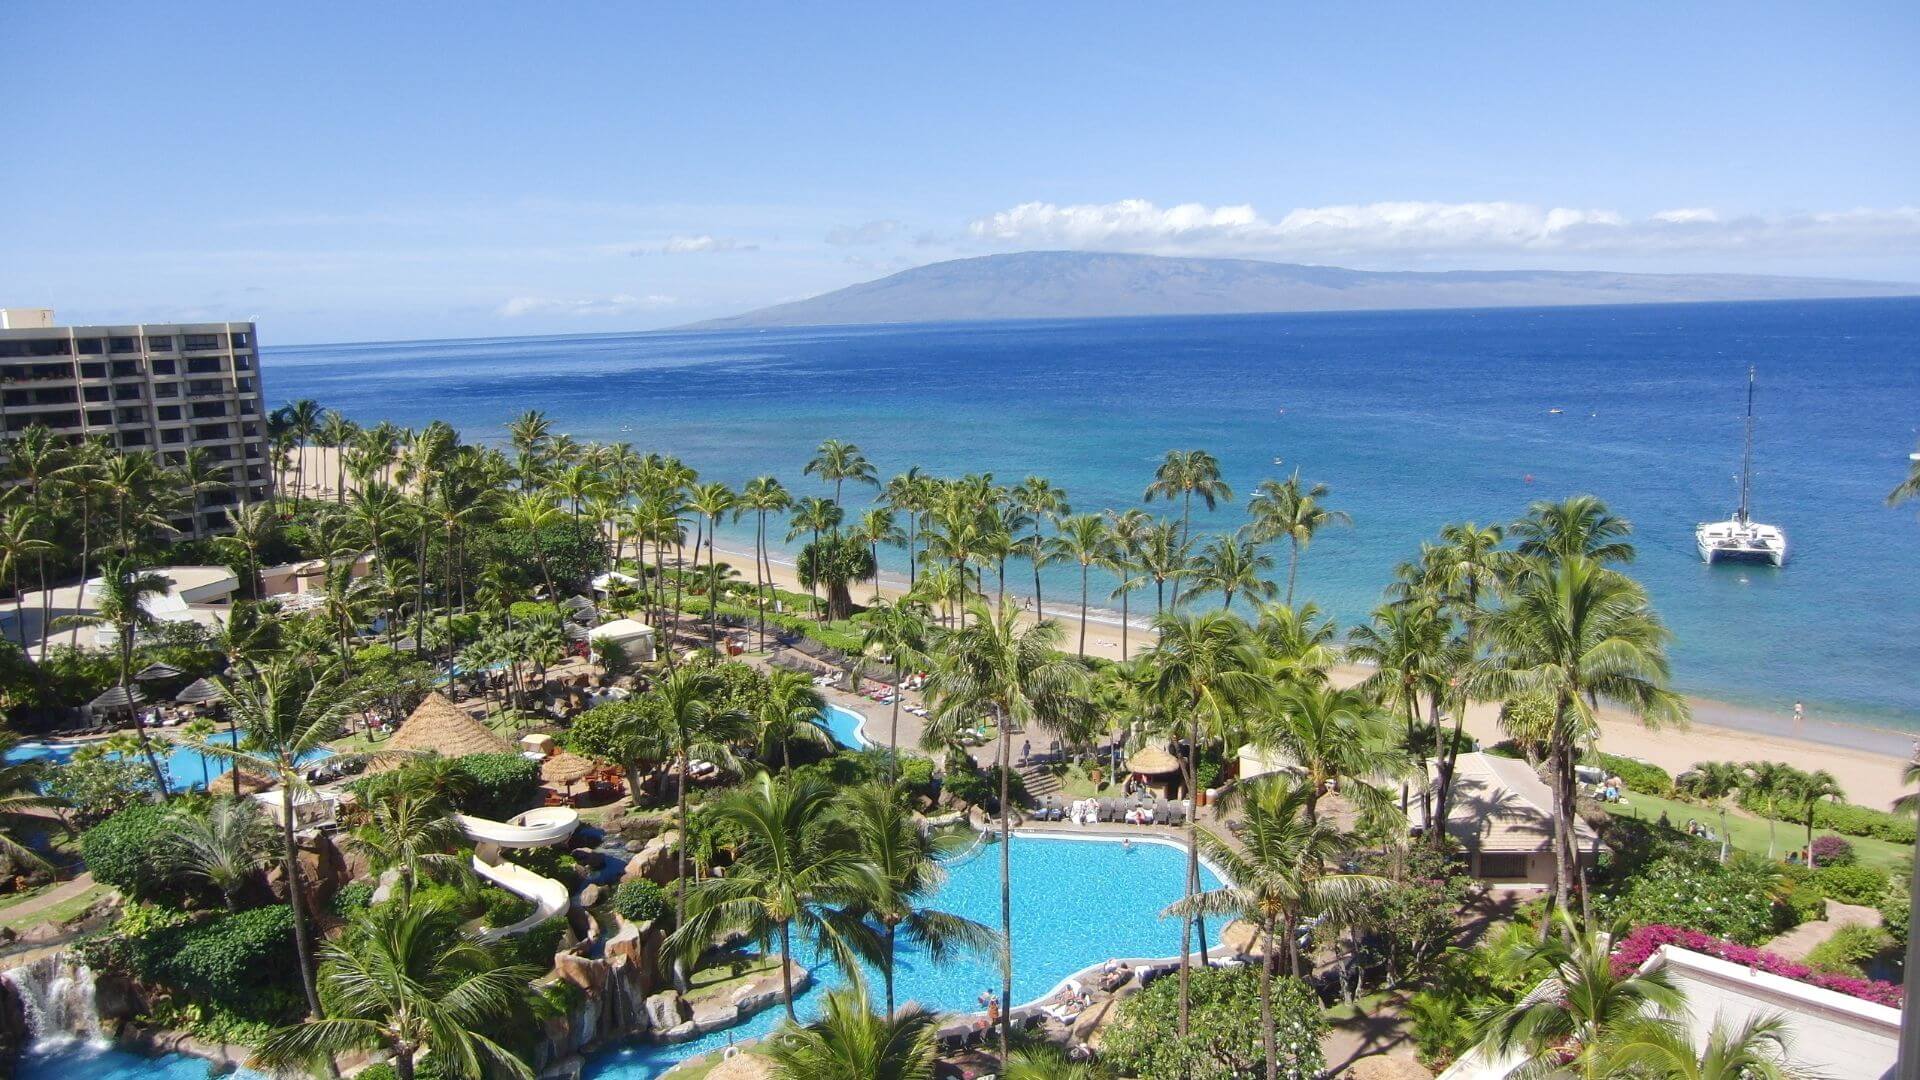 Family-friendly resorts in Hawaii